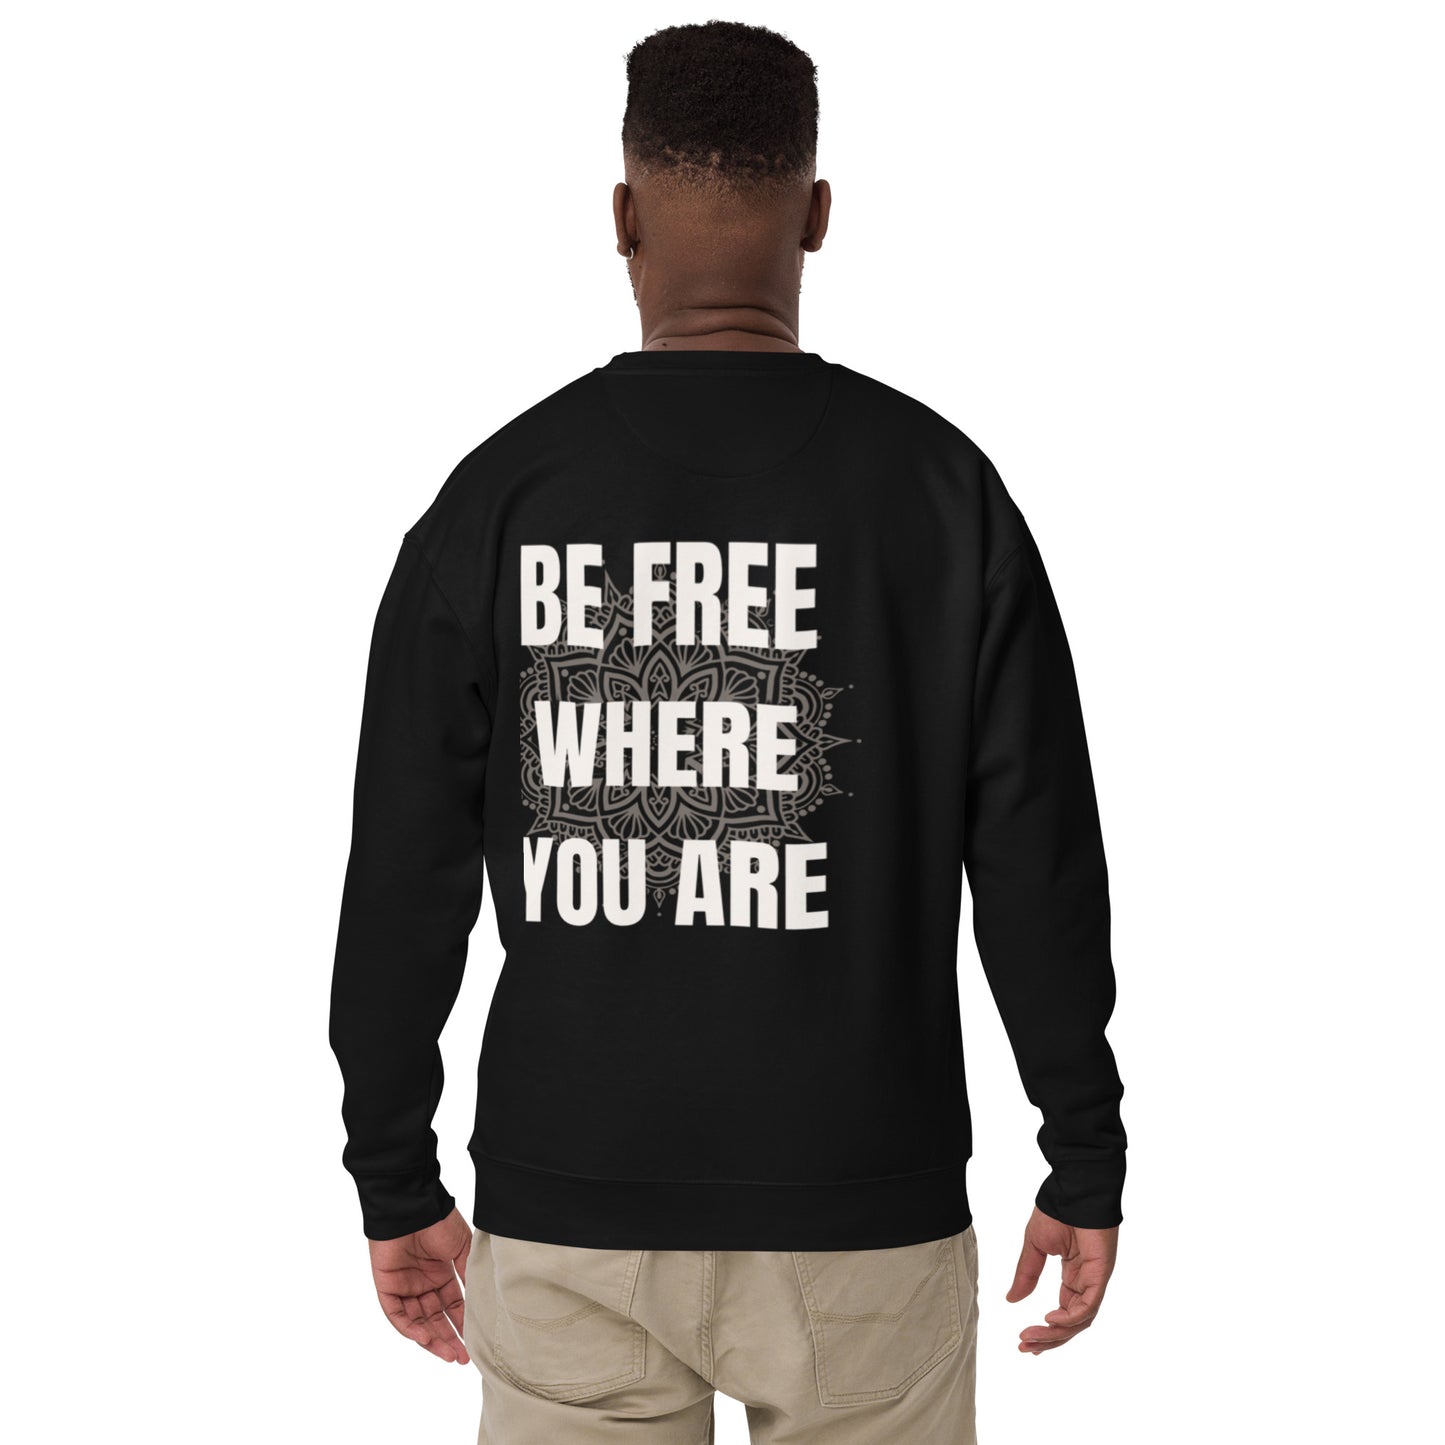 Boundless Freedom Premium Sweatshirt